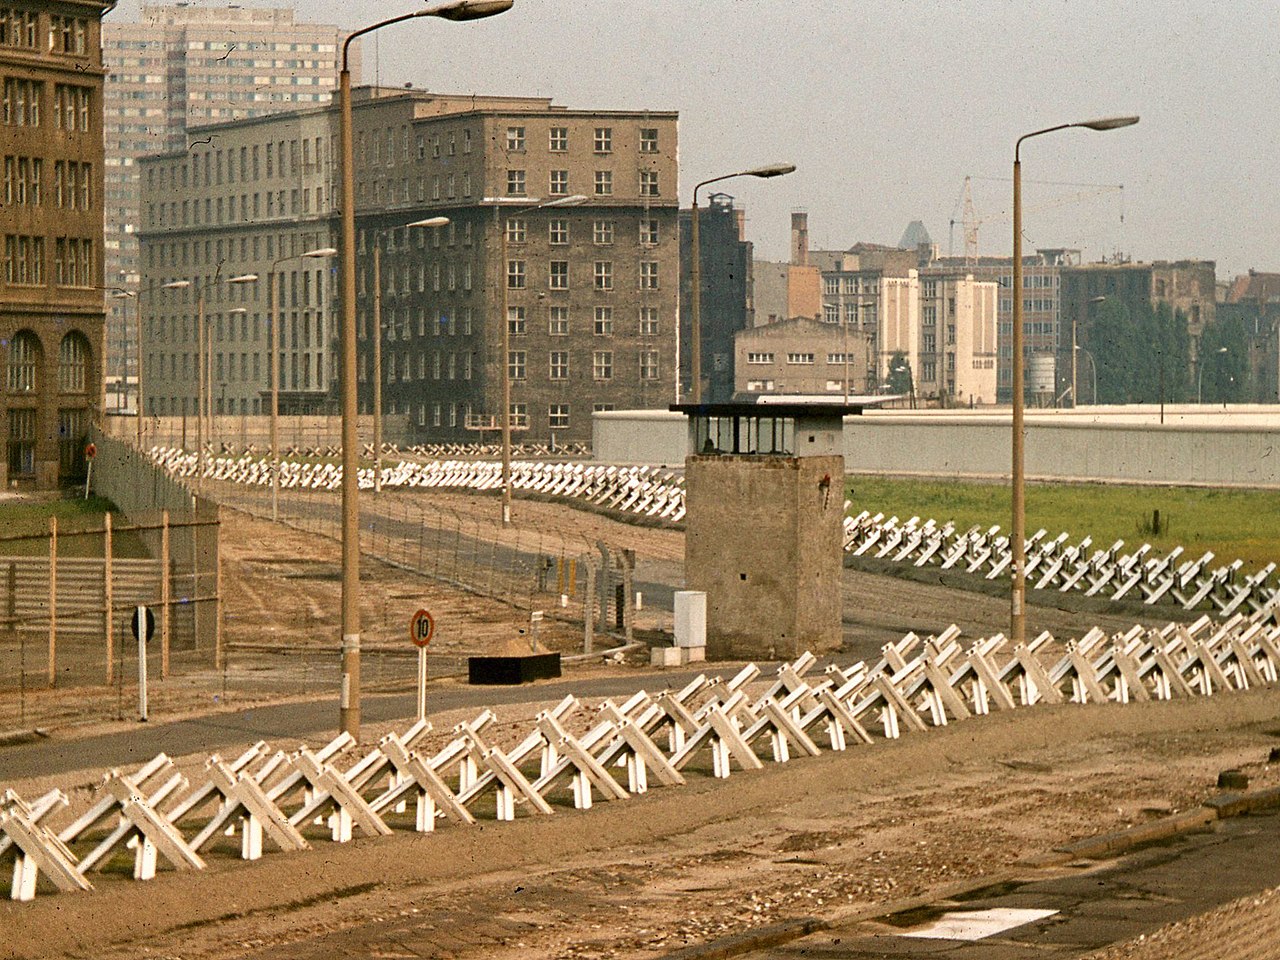 Berlin Wall death strip, 1977, showing Czech hedgehog and guard tower.